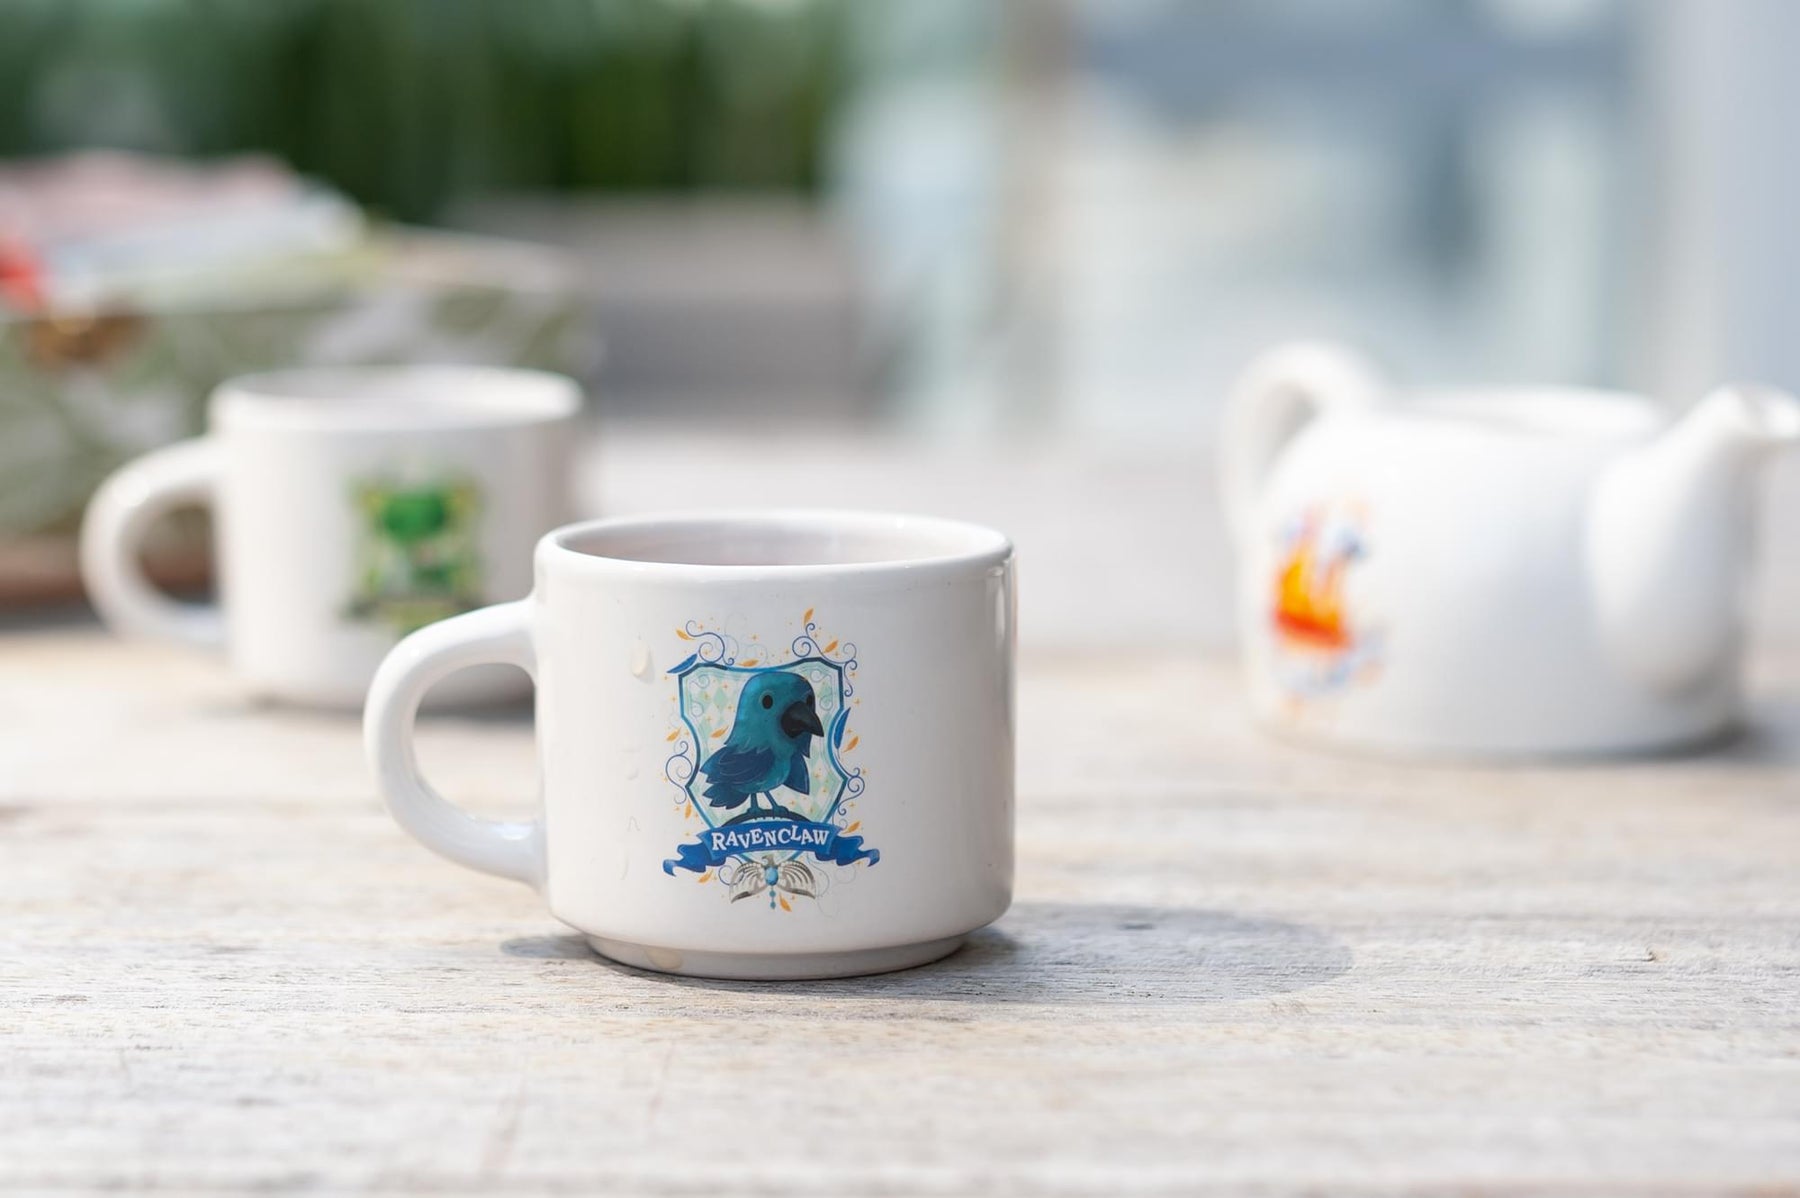 Harry Potter Ravenclaw Mini Mug | Small Collectible House Mug | 2 Inches Tall